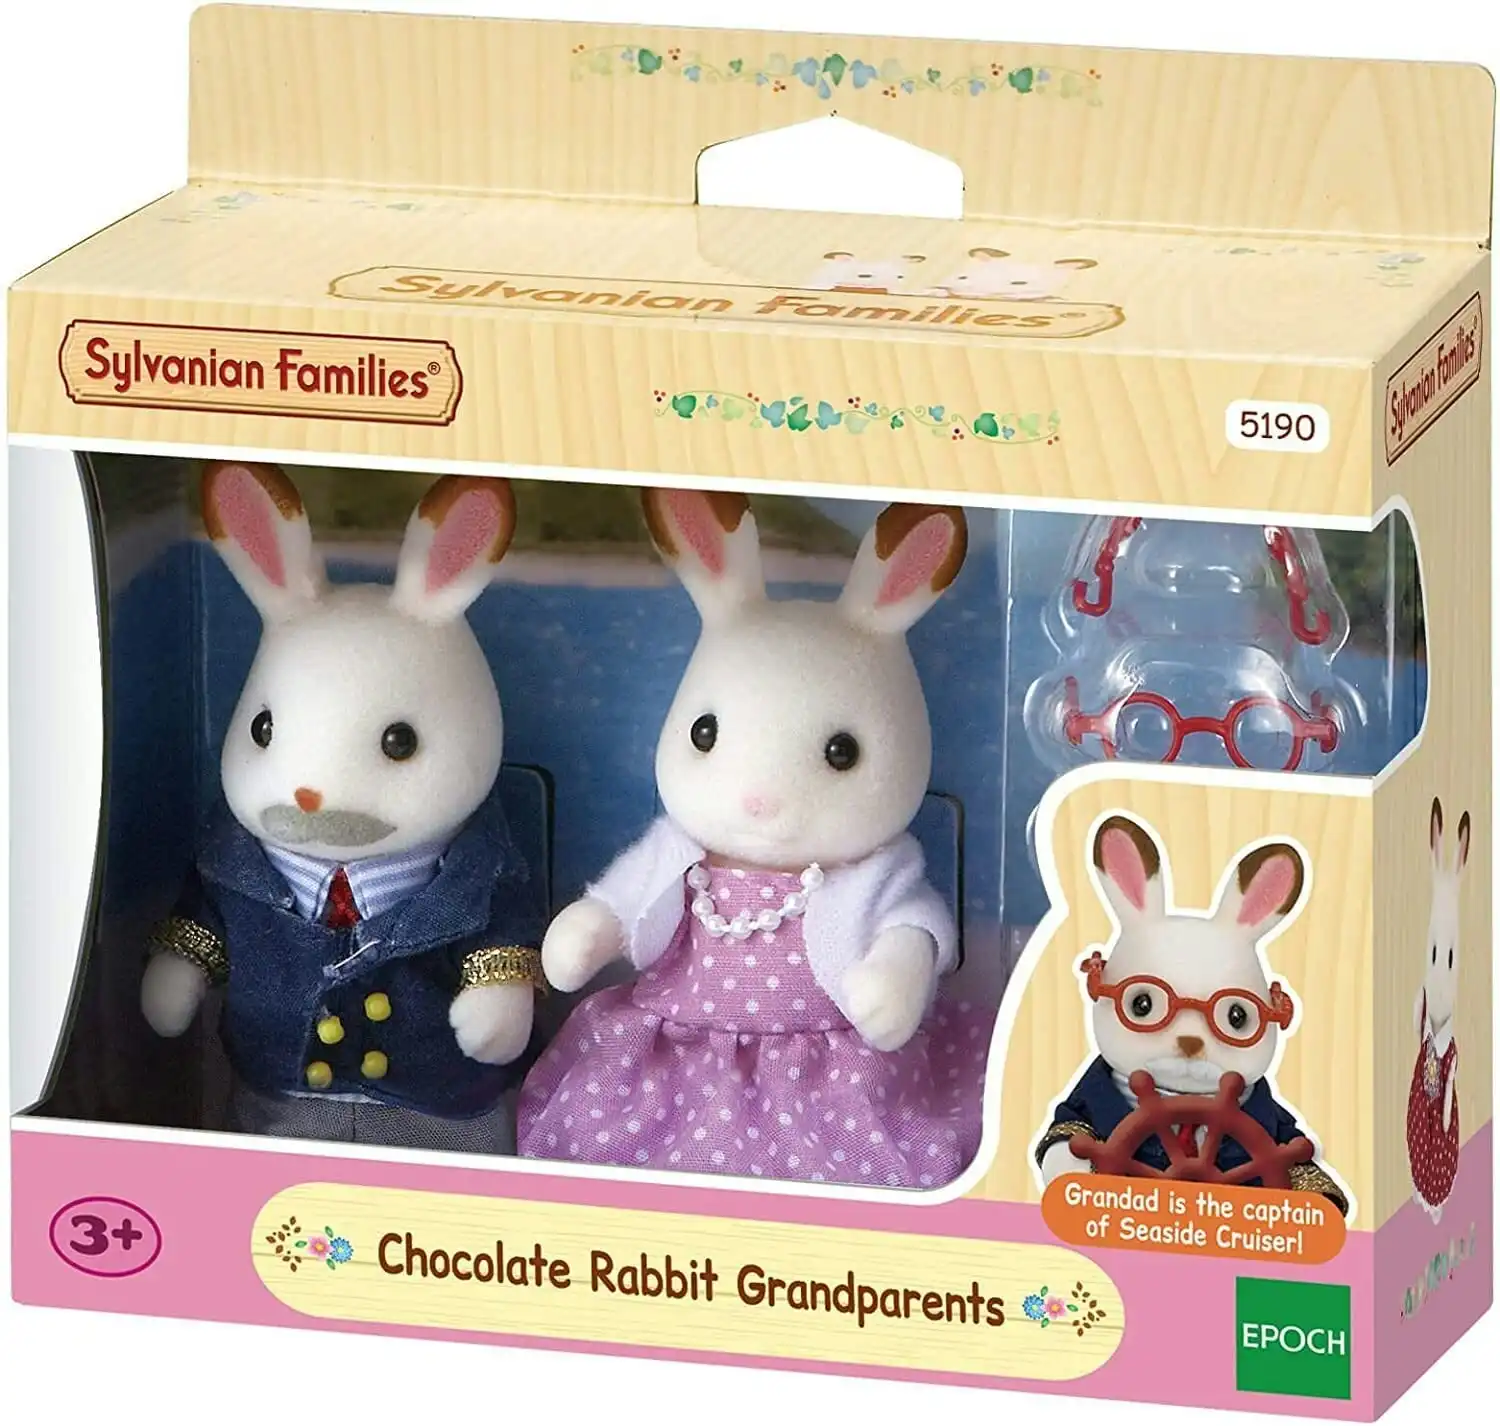 Sylvanian Families - Chocolate Rabbit Grandparents Animal Doll Playset